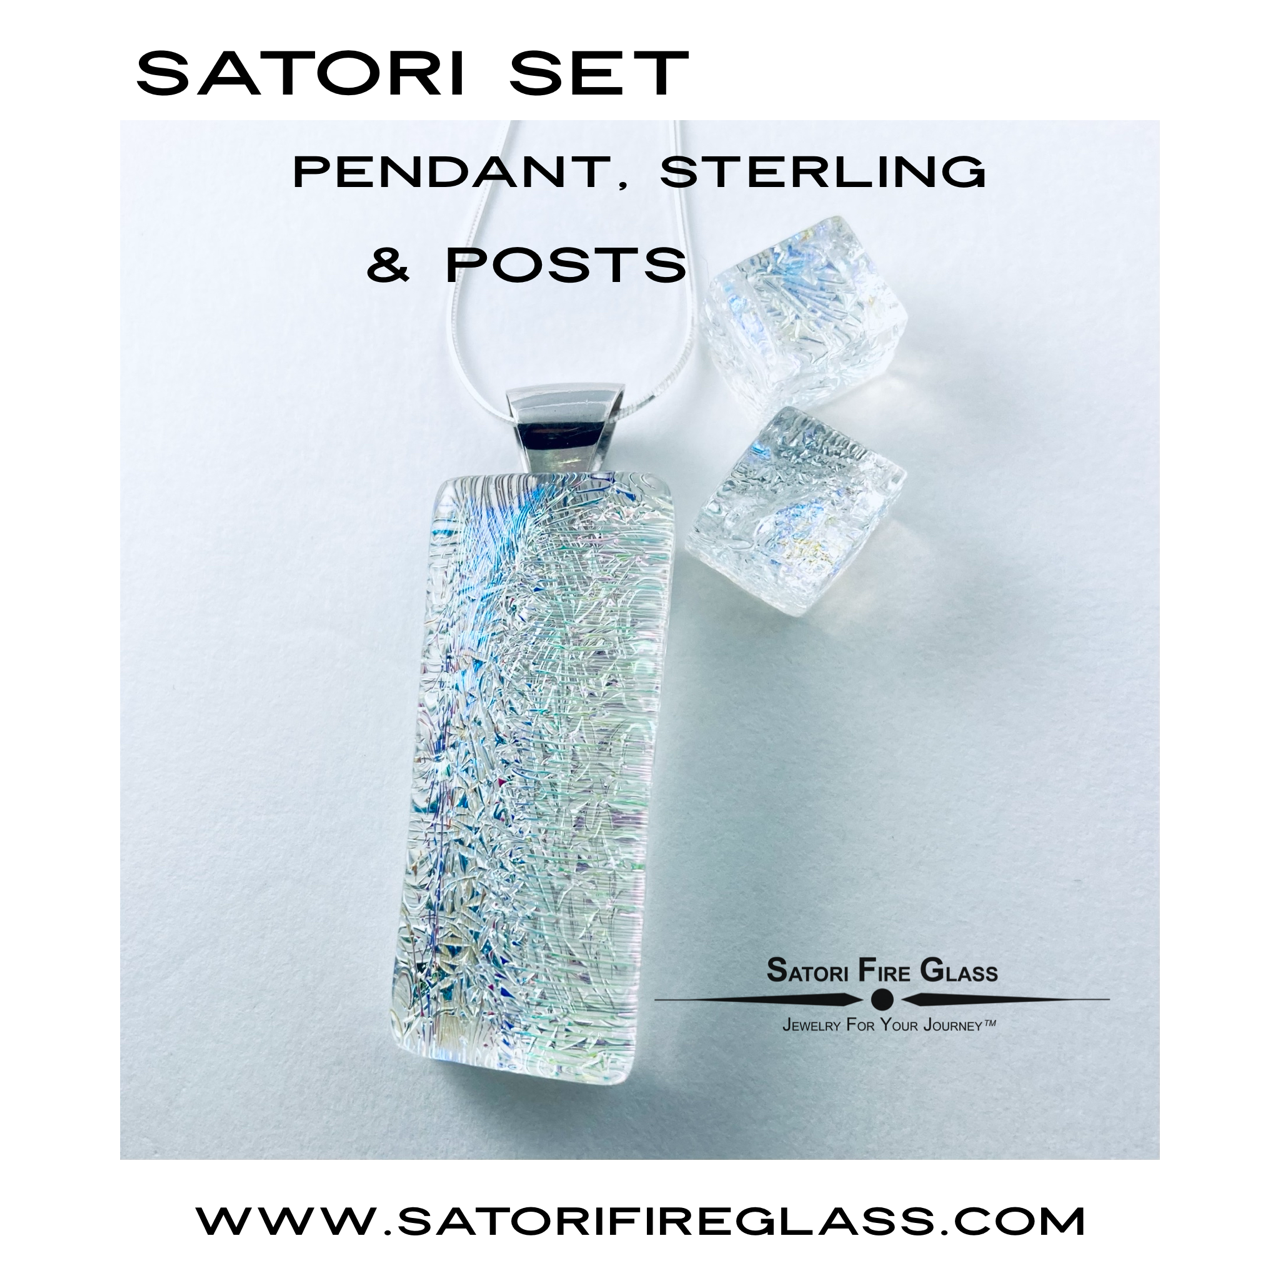 Satori Set Pendant & Posts